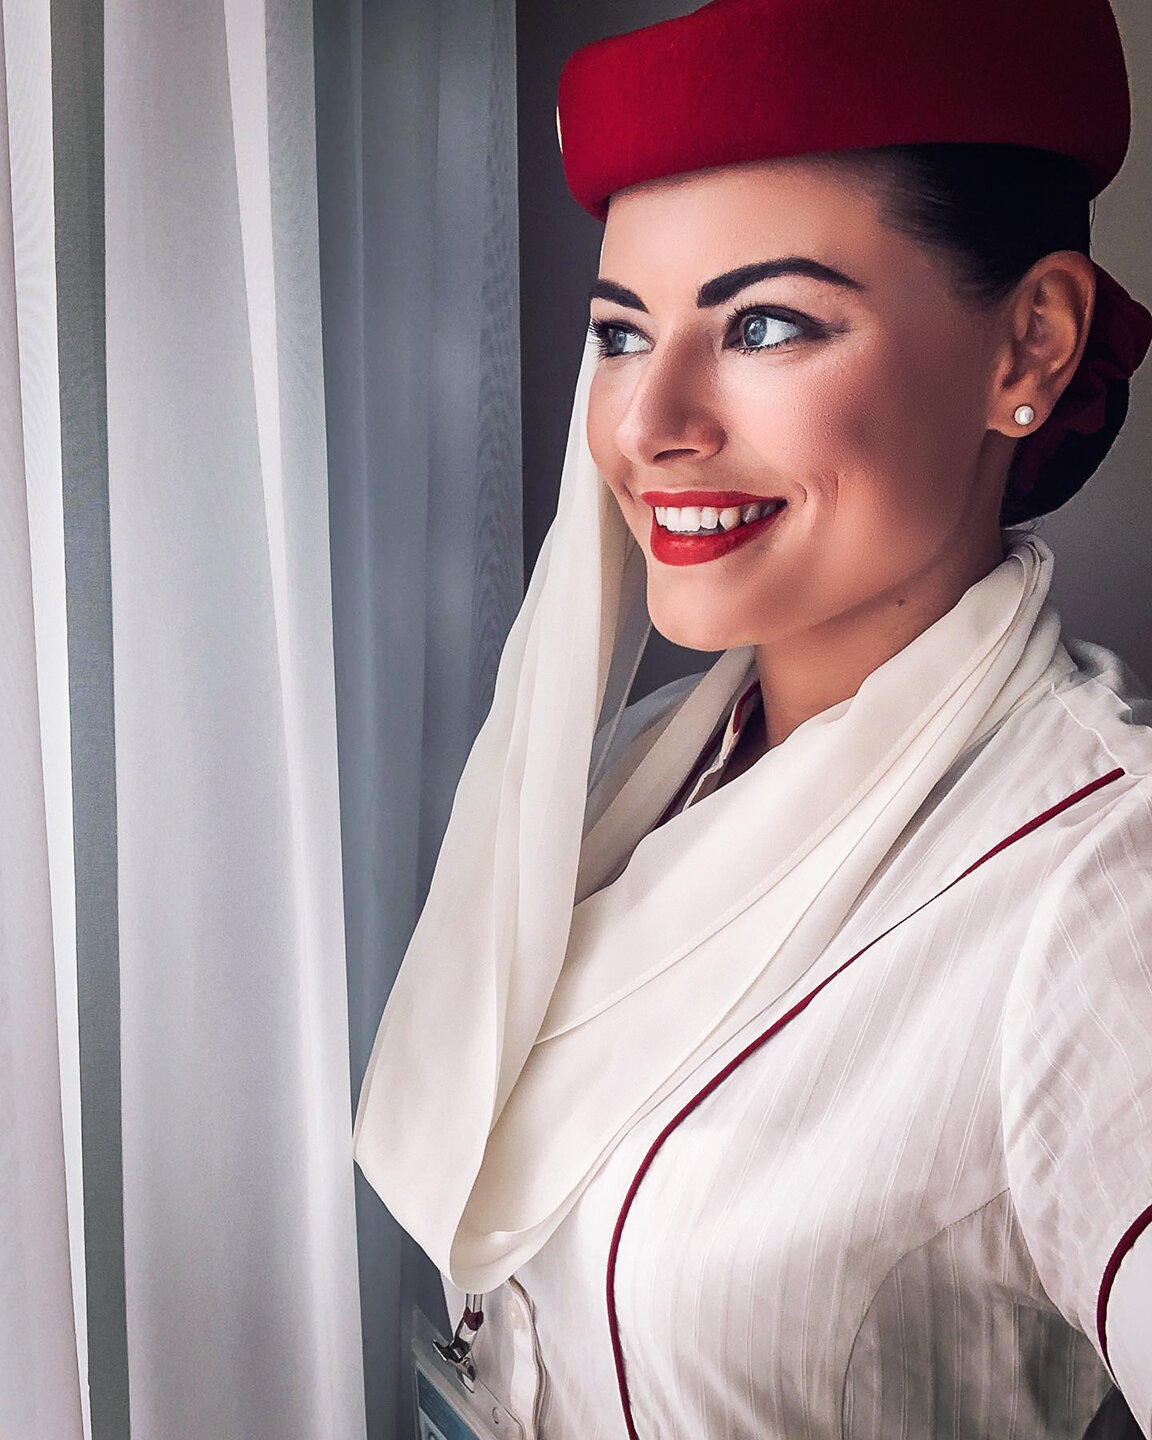 Qantas Should Let Flight Attendants Go Makeup-Free and Ditch High Heels,  Union Demands